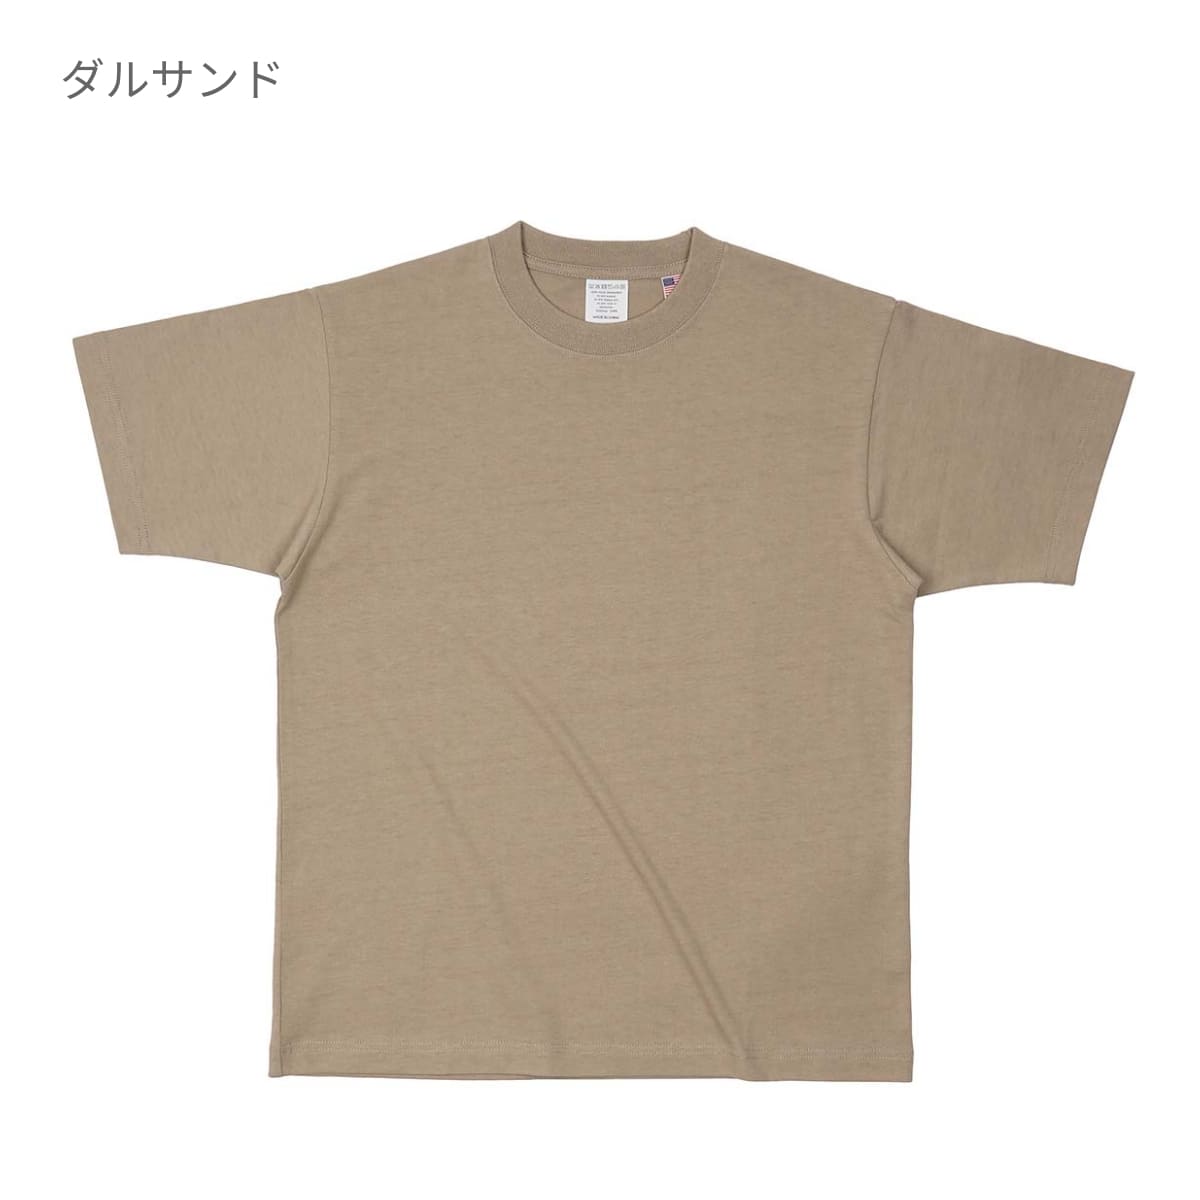 USAコットンTシャツ | ビッグサイズ | 1枚 | UCS-950 | ダルサンド